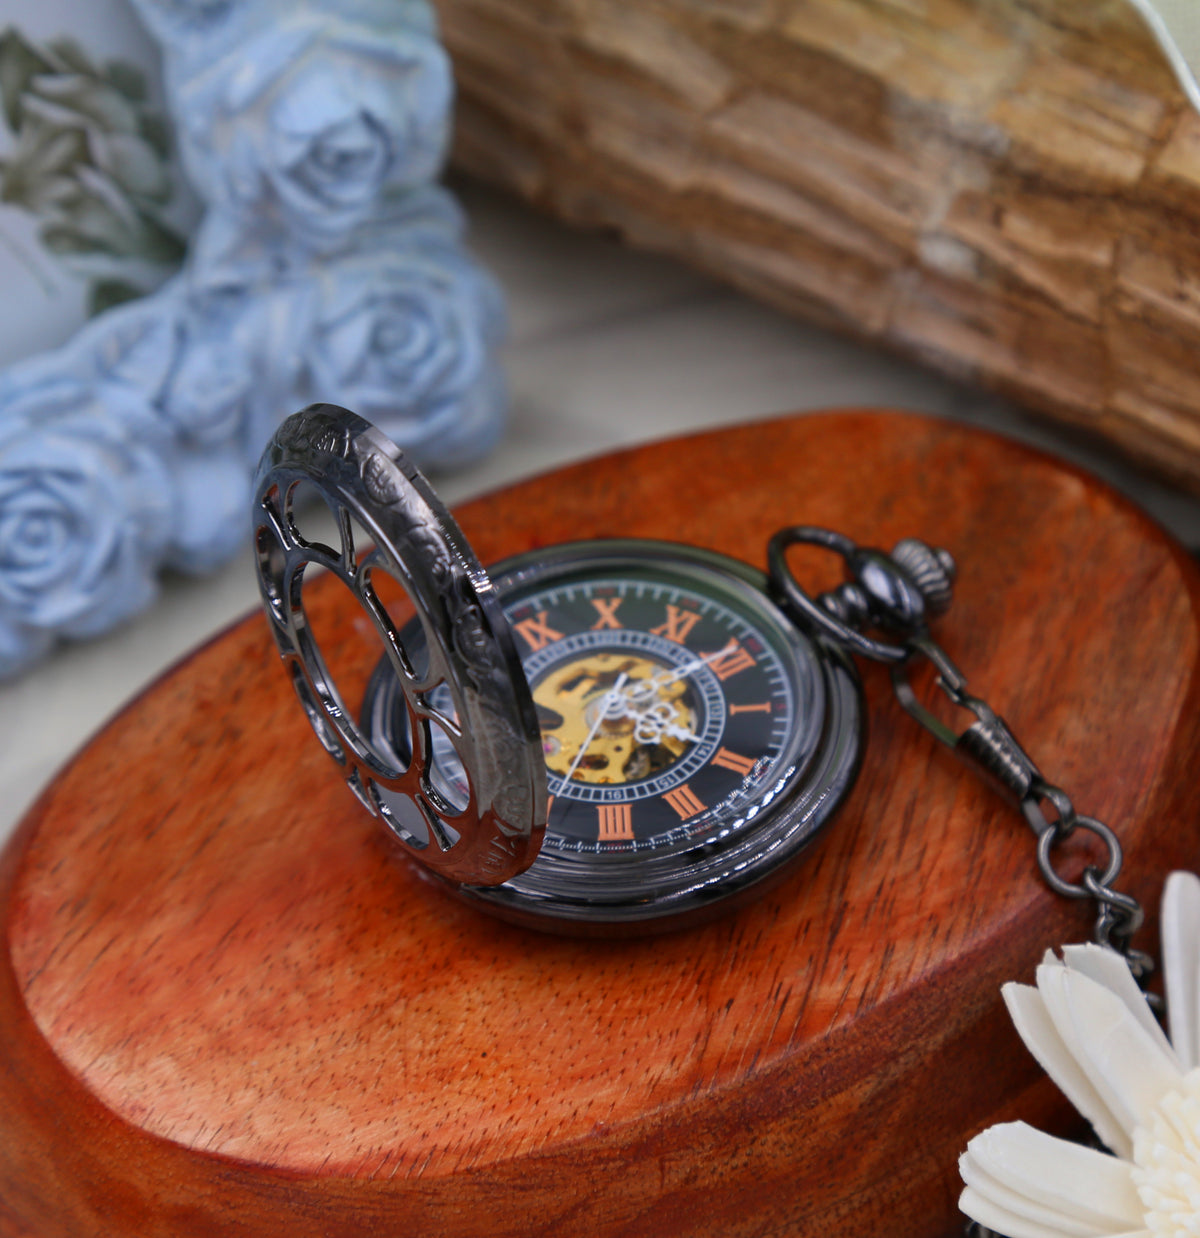 Personalized Pocket Watch - Mechanical Pocket watch with Vest chain- Celtic Love Knot - Steampunk Black Watch Groomsmen Gift VM006